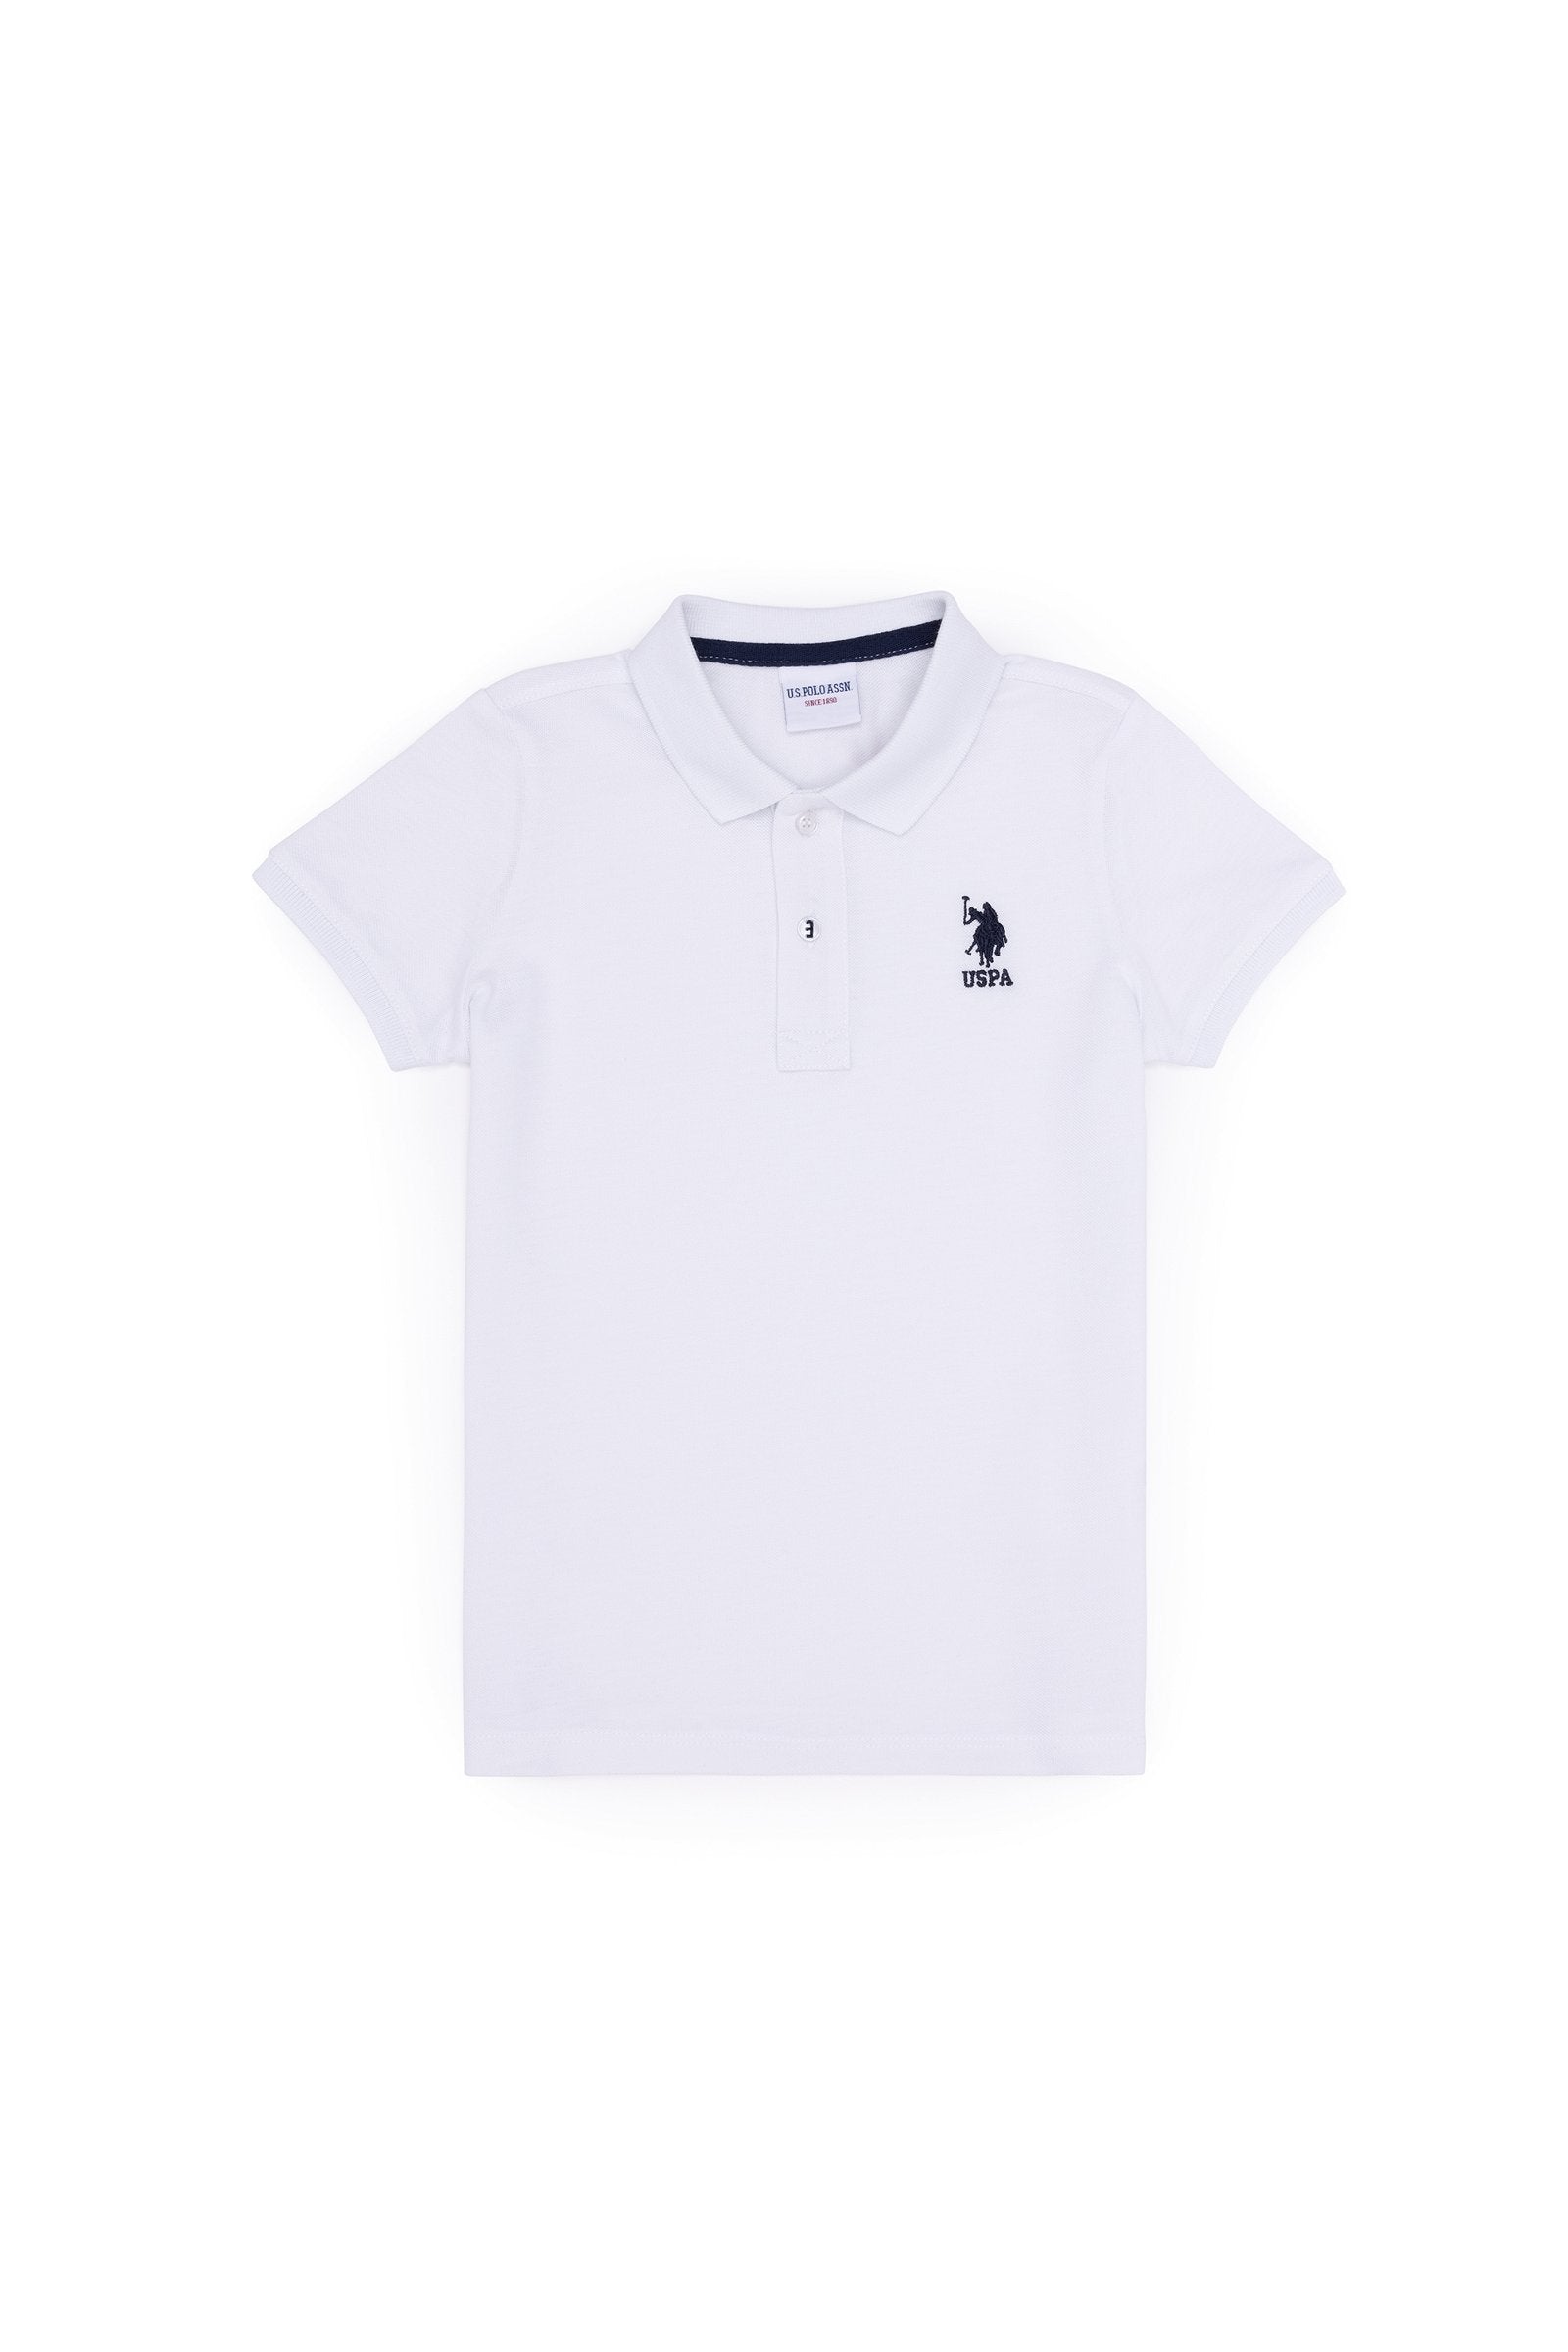 White Short Sleeve Polo Shirt_G083SZ0110 1570859_VR013_01